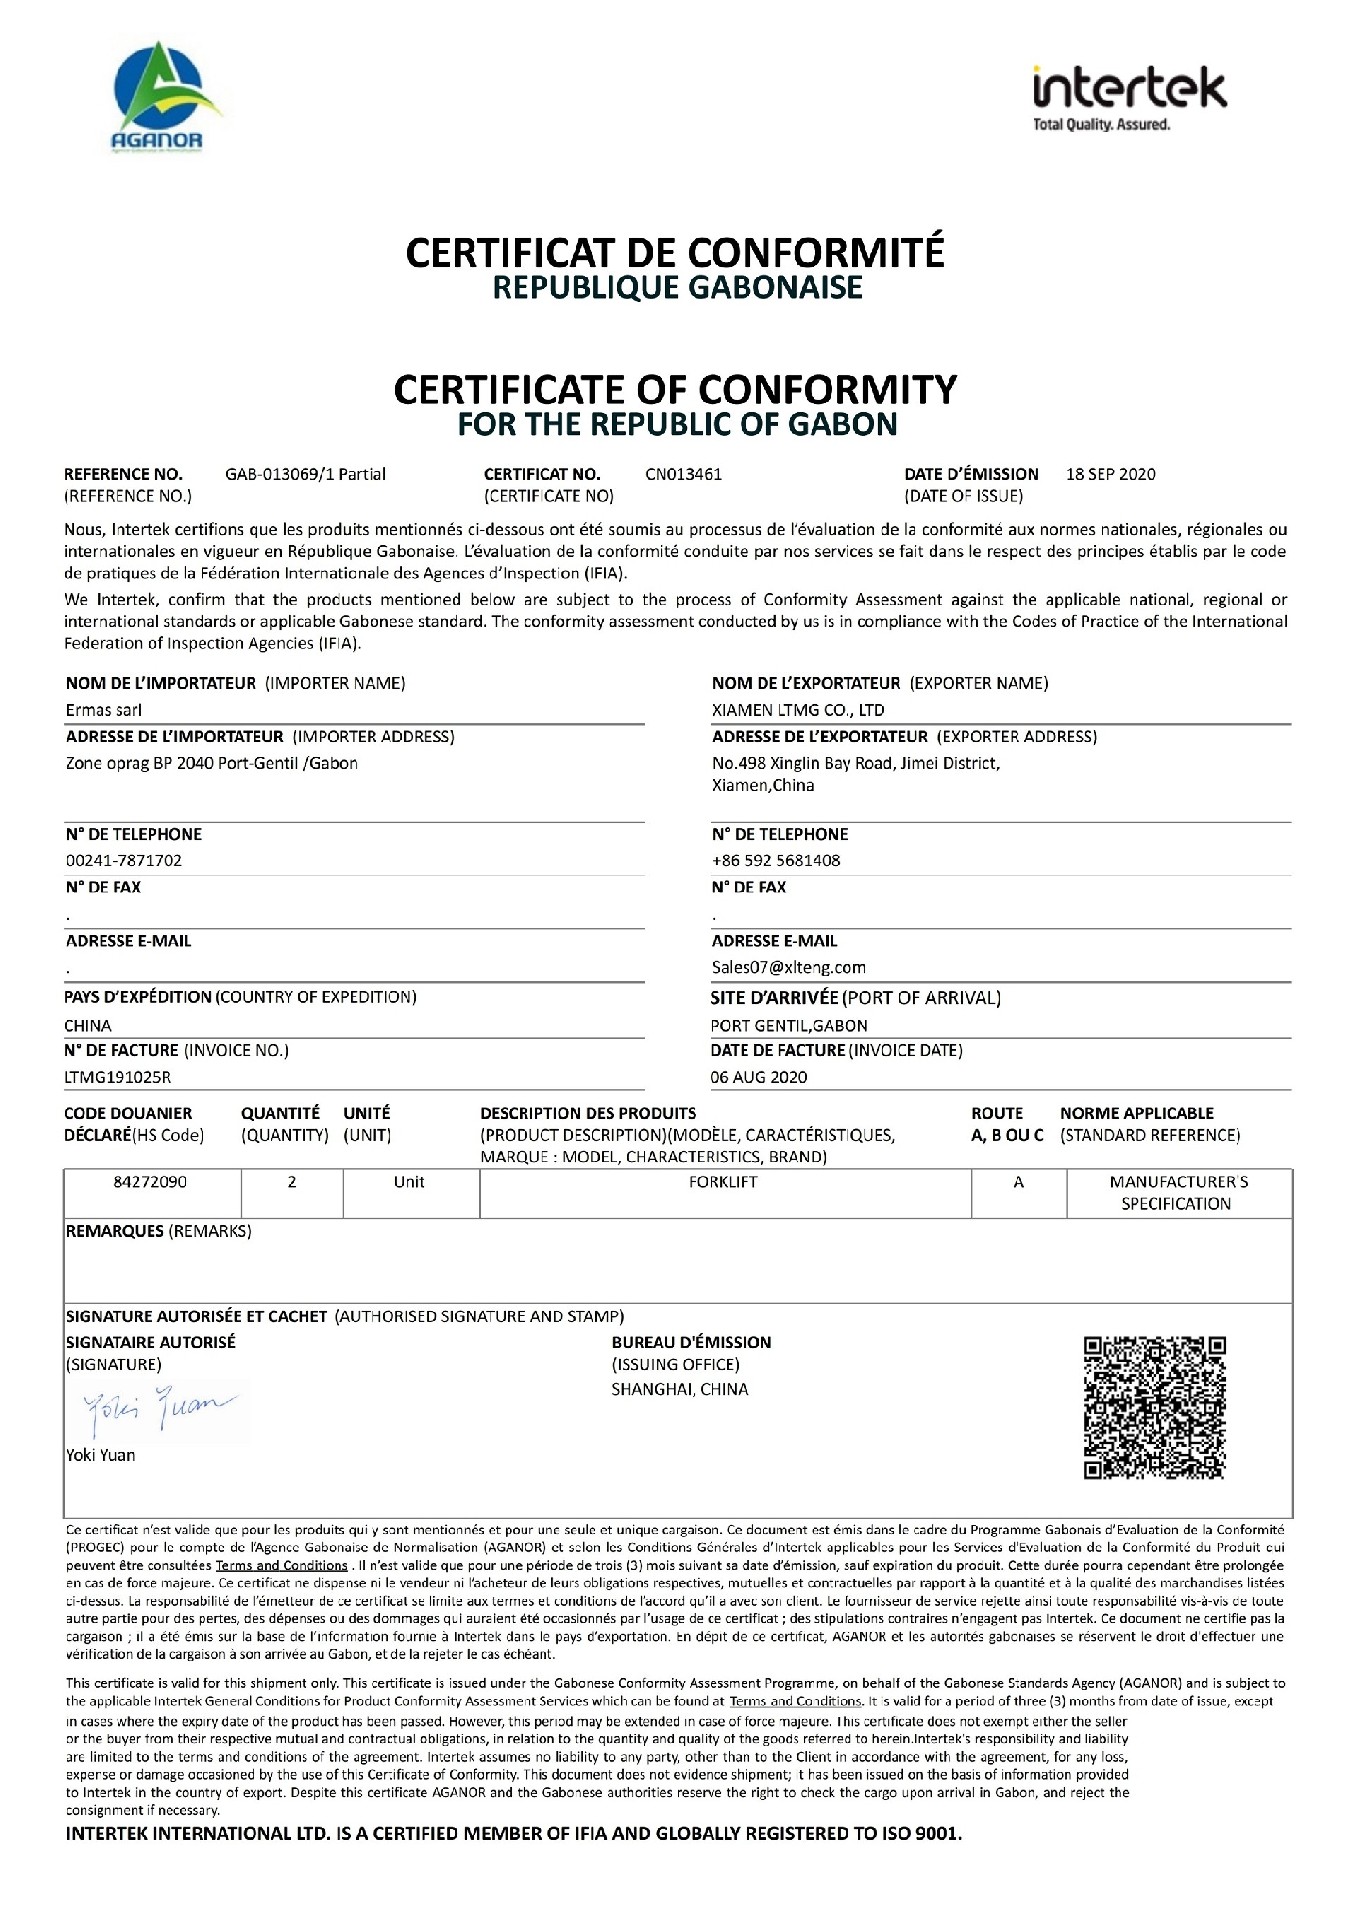 Certificate of conformity 1